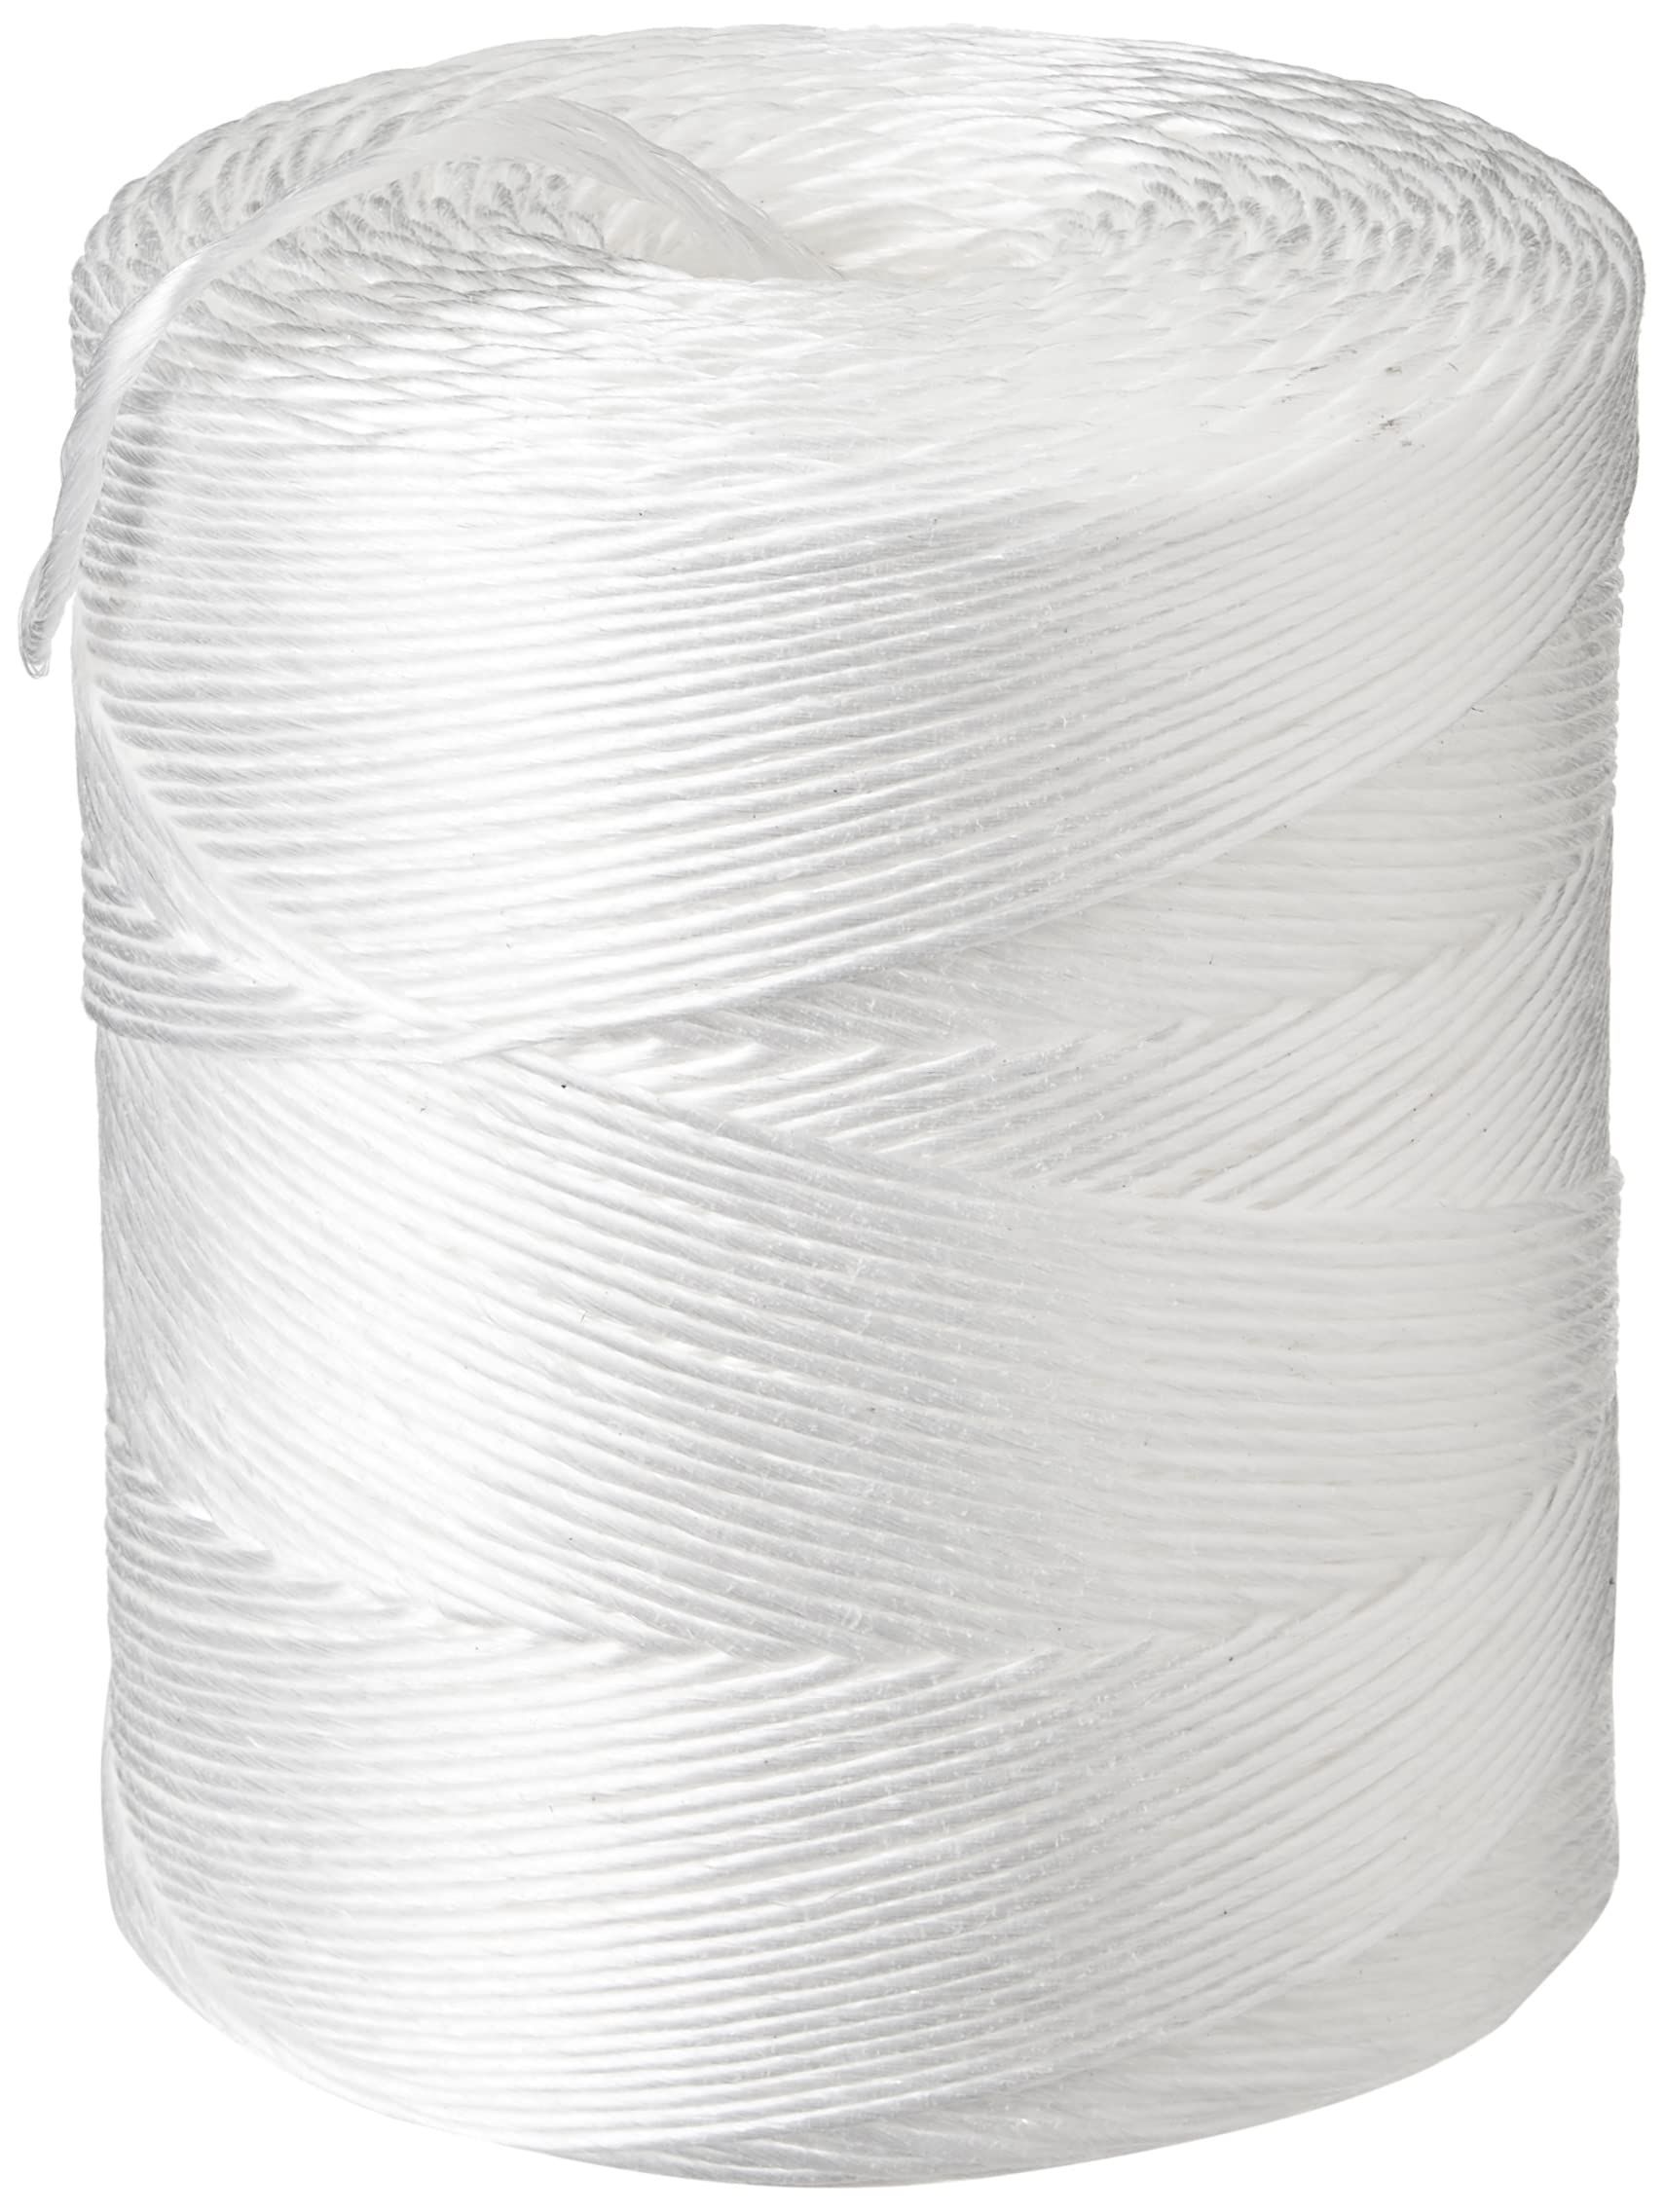 Шпагат из полипропилена Kraftcom, 3мм х 100м (1шт), цвет - белый бант шар 5